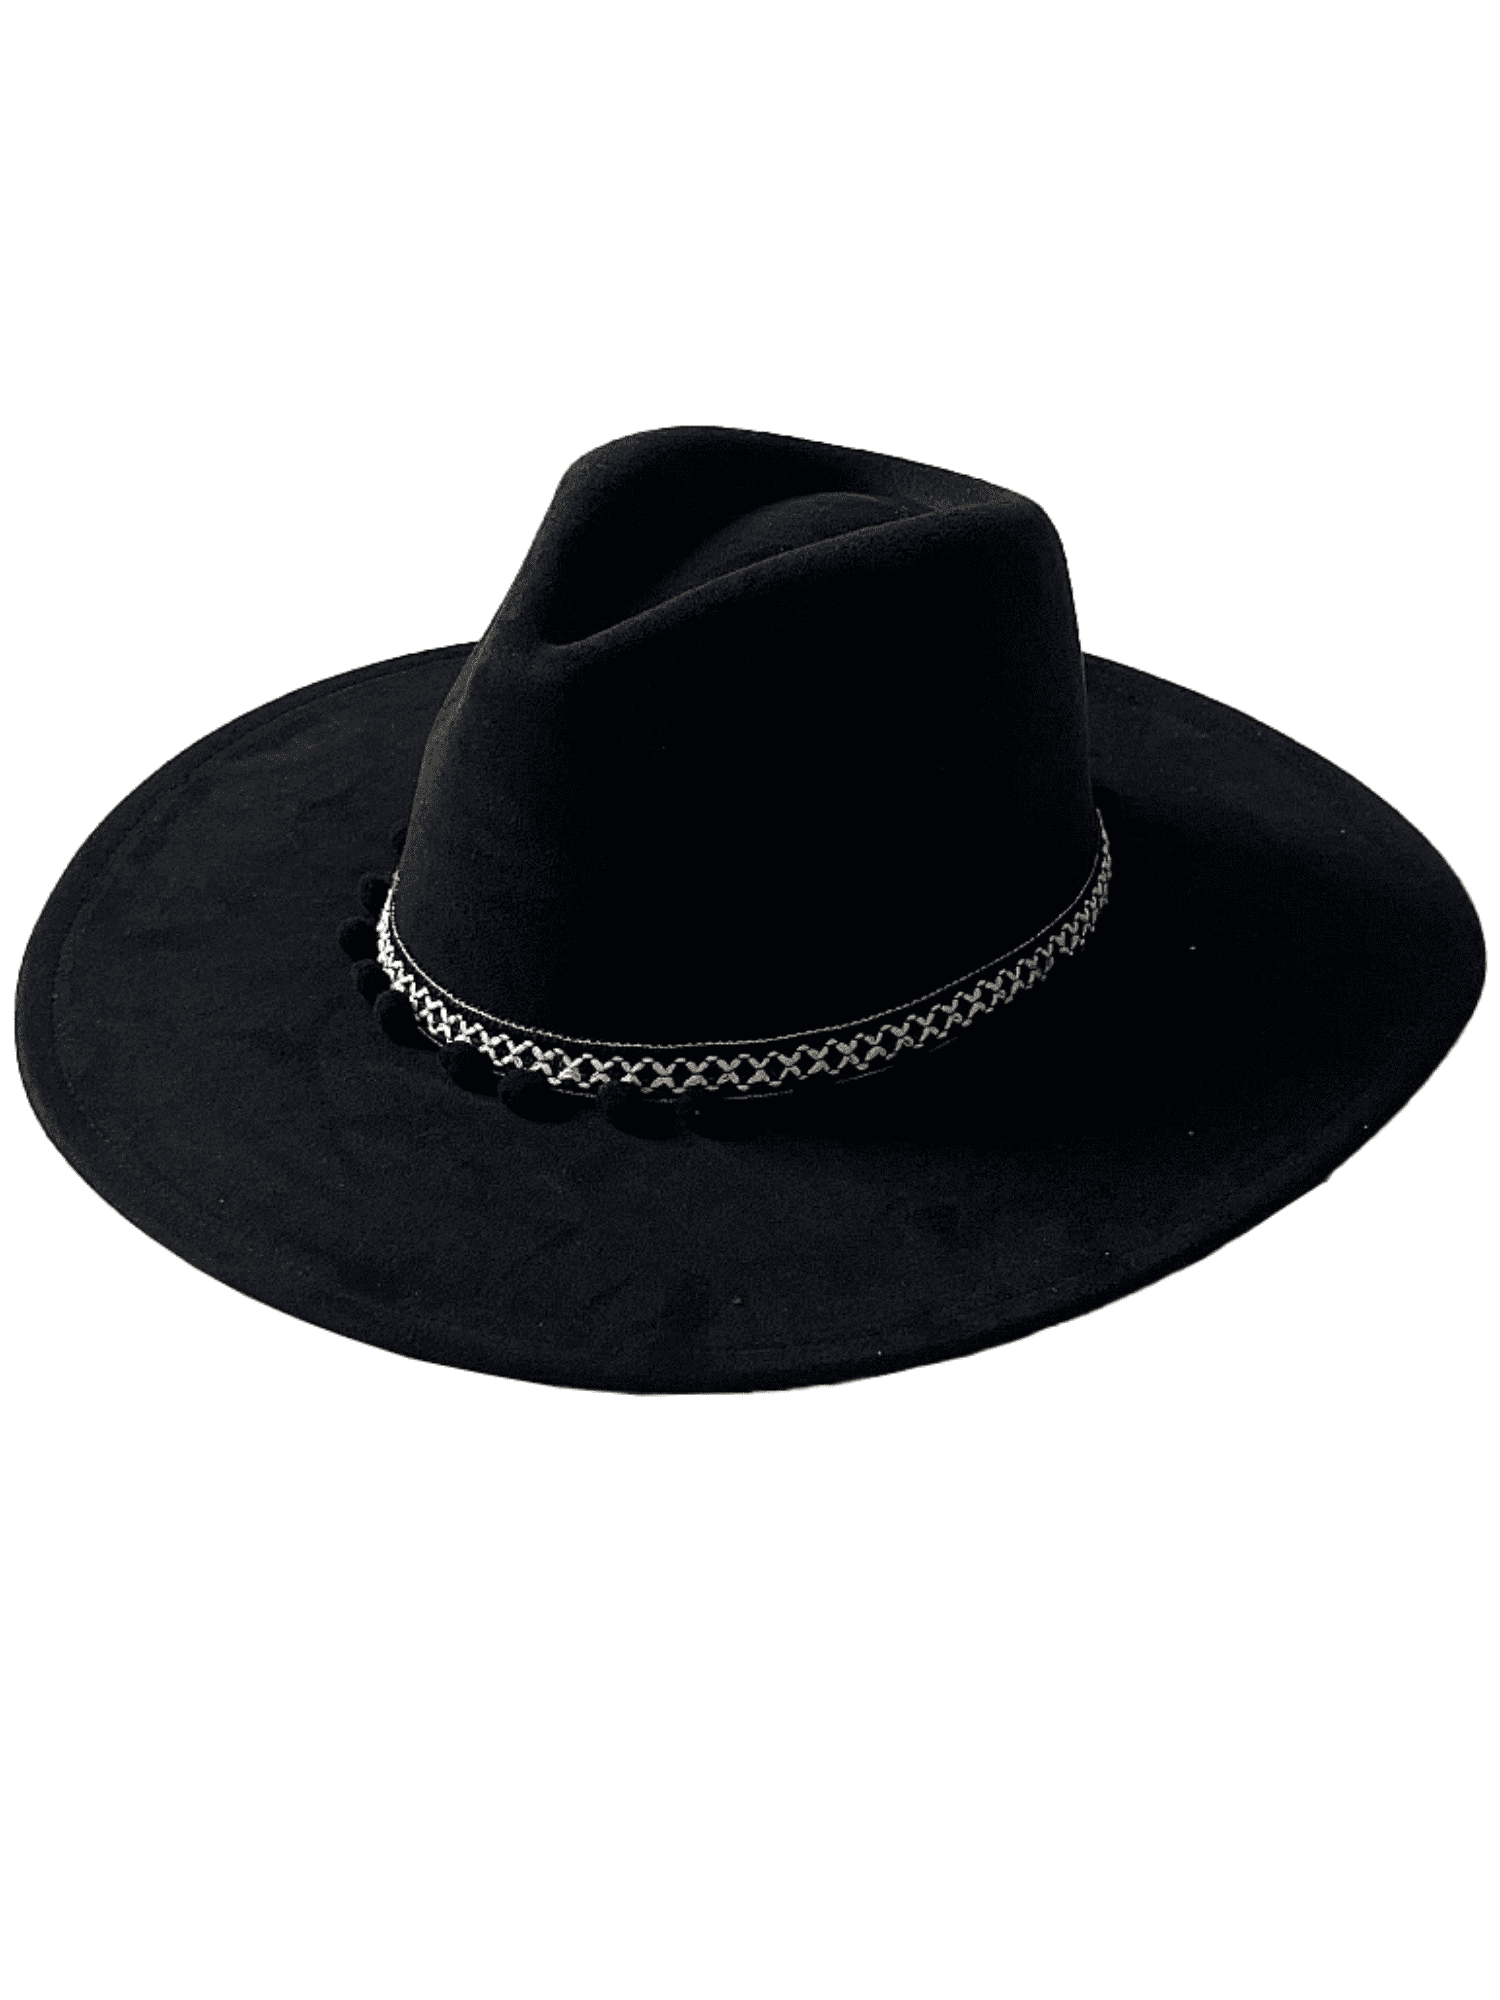 Panama Jack Gambler Straw Hat - Lightweight, 3 Big Brim, Inner Elastic  Sweatband, 3-Pleat Ribbon Hat Band (Black, Large/X-Large)